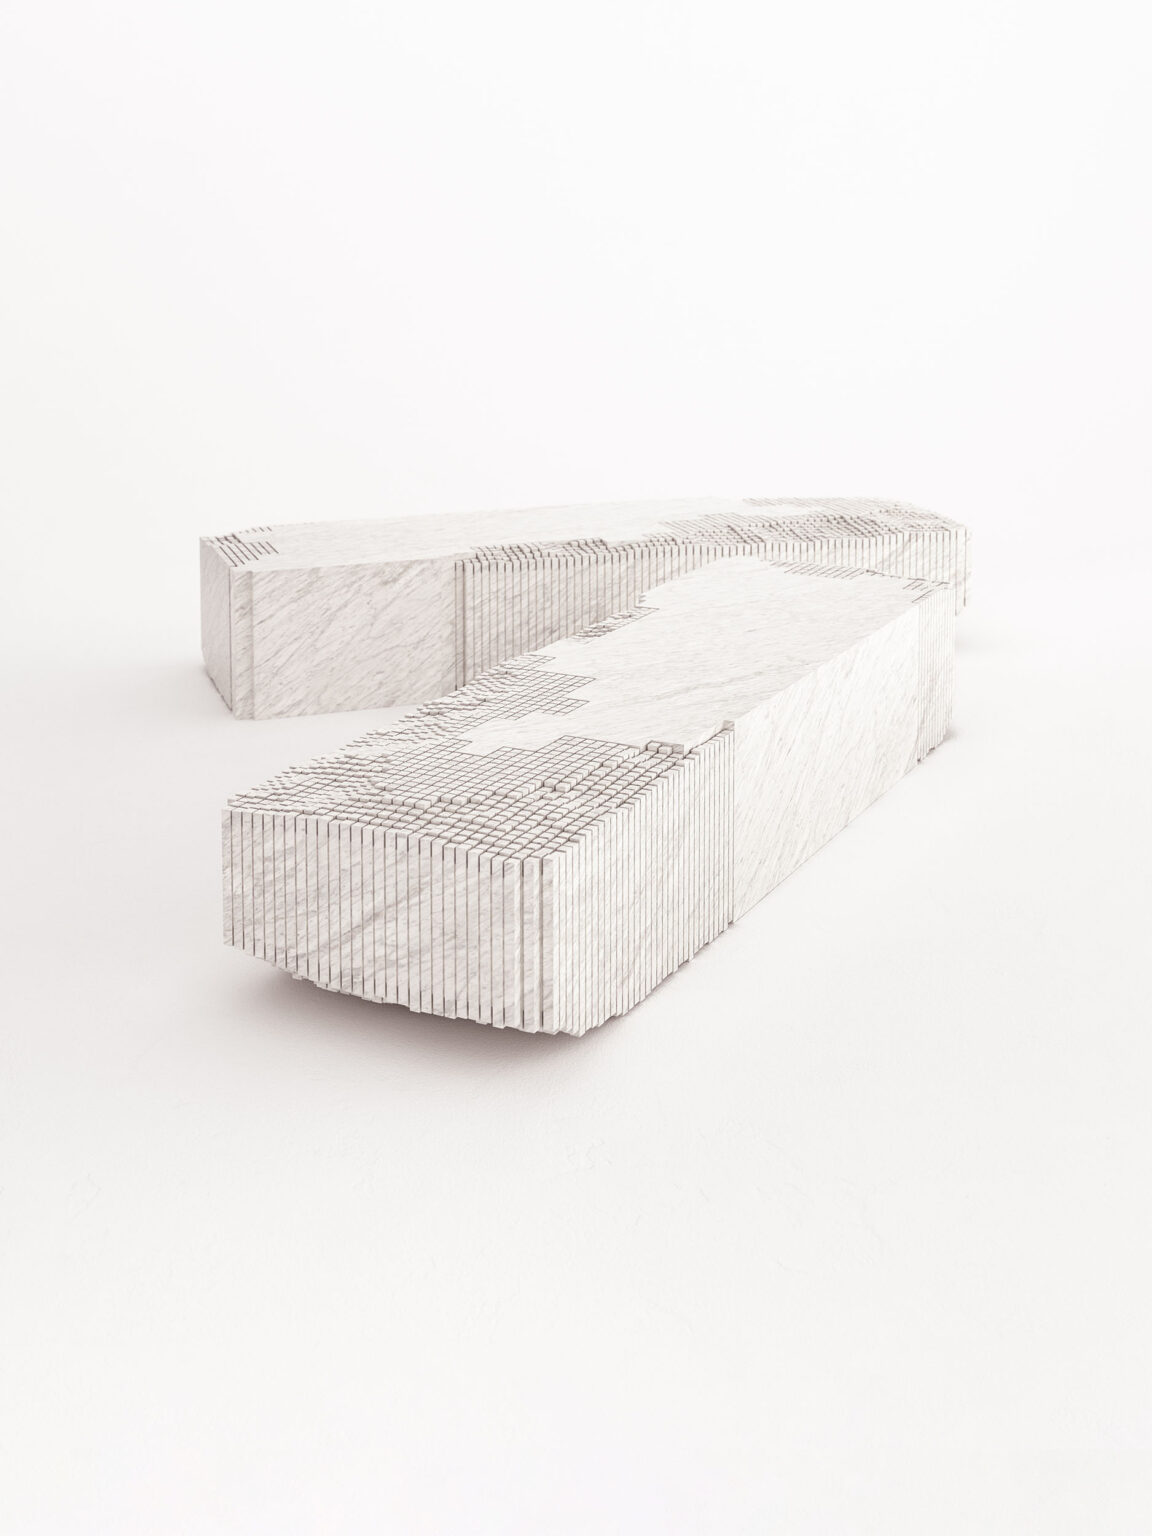 ERO 003 020-F - Coffee table - Estremoz marble